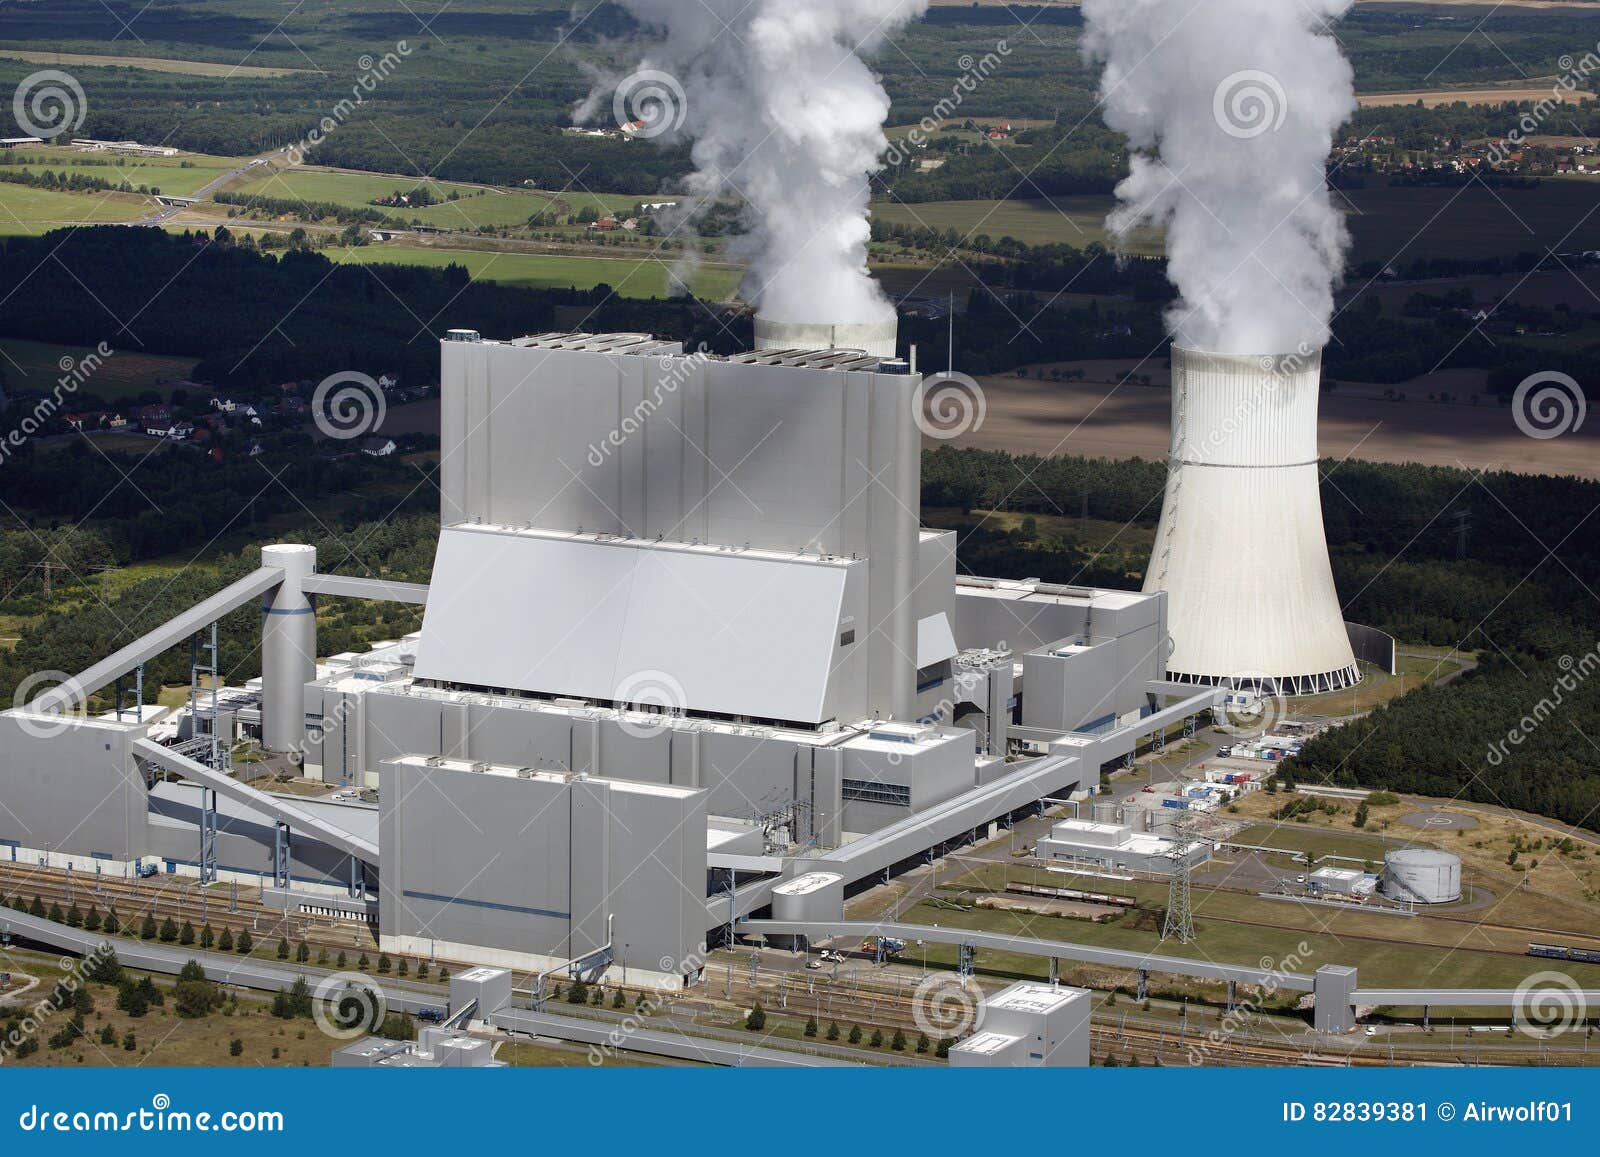 power station stock image. Image of germany, - 82839381